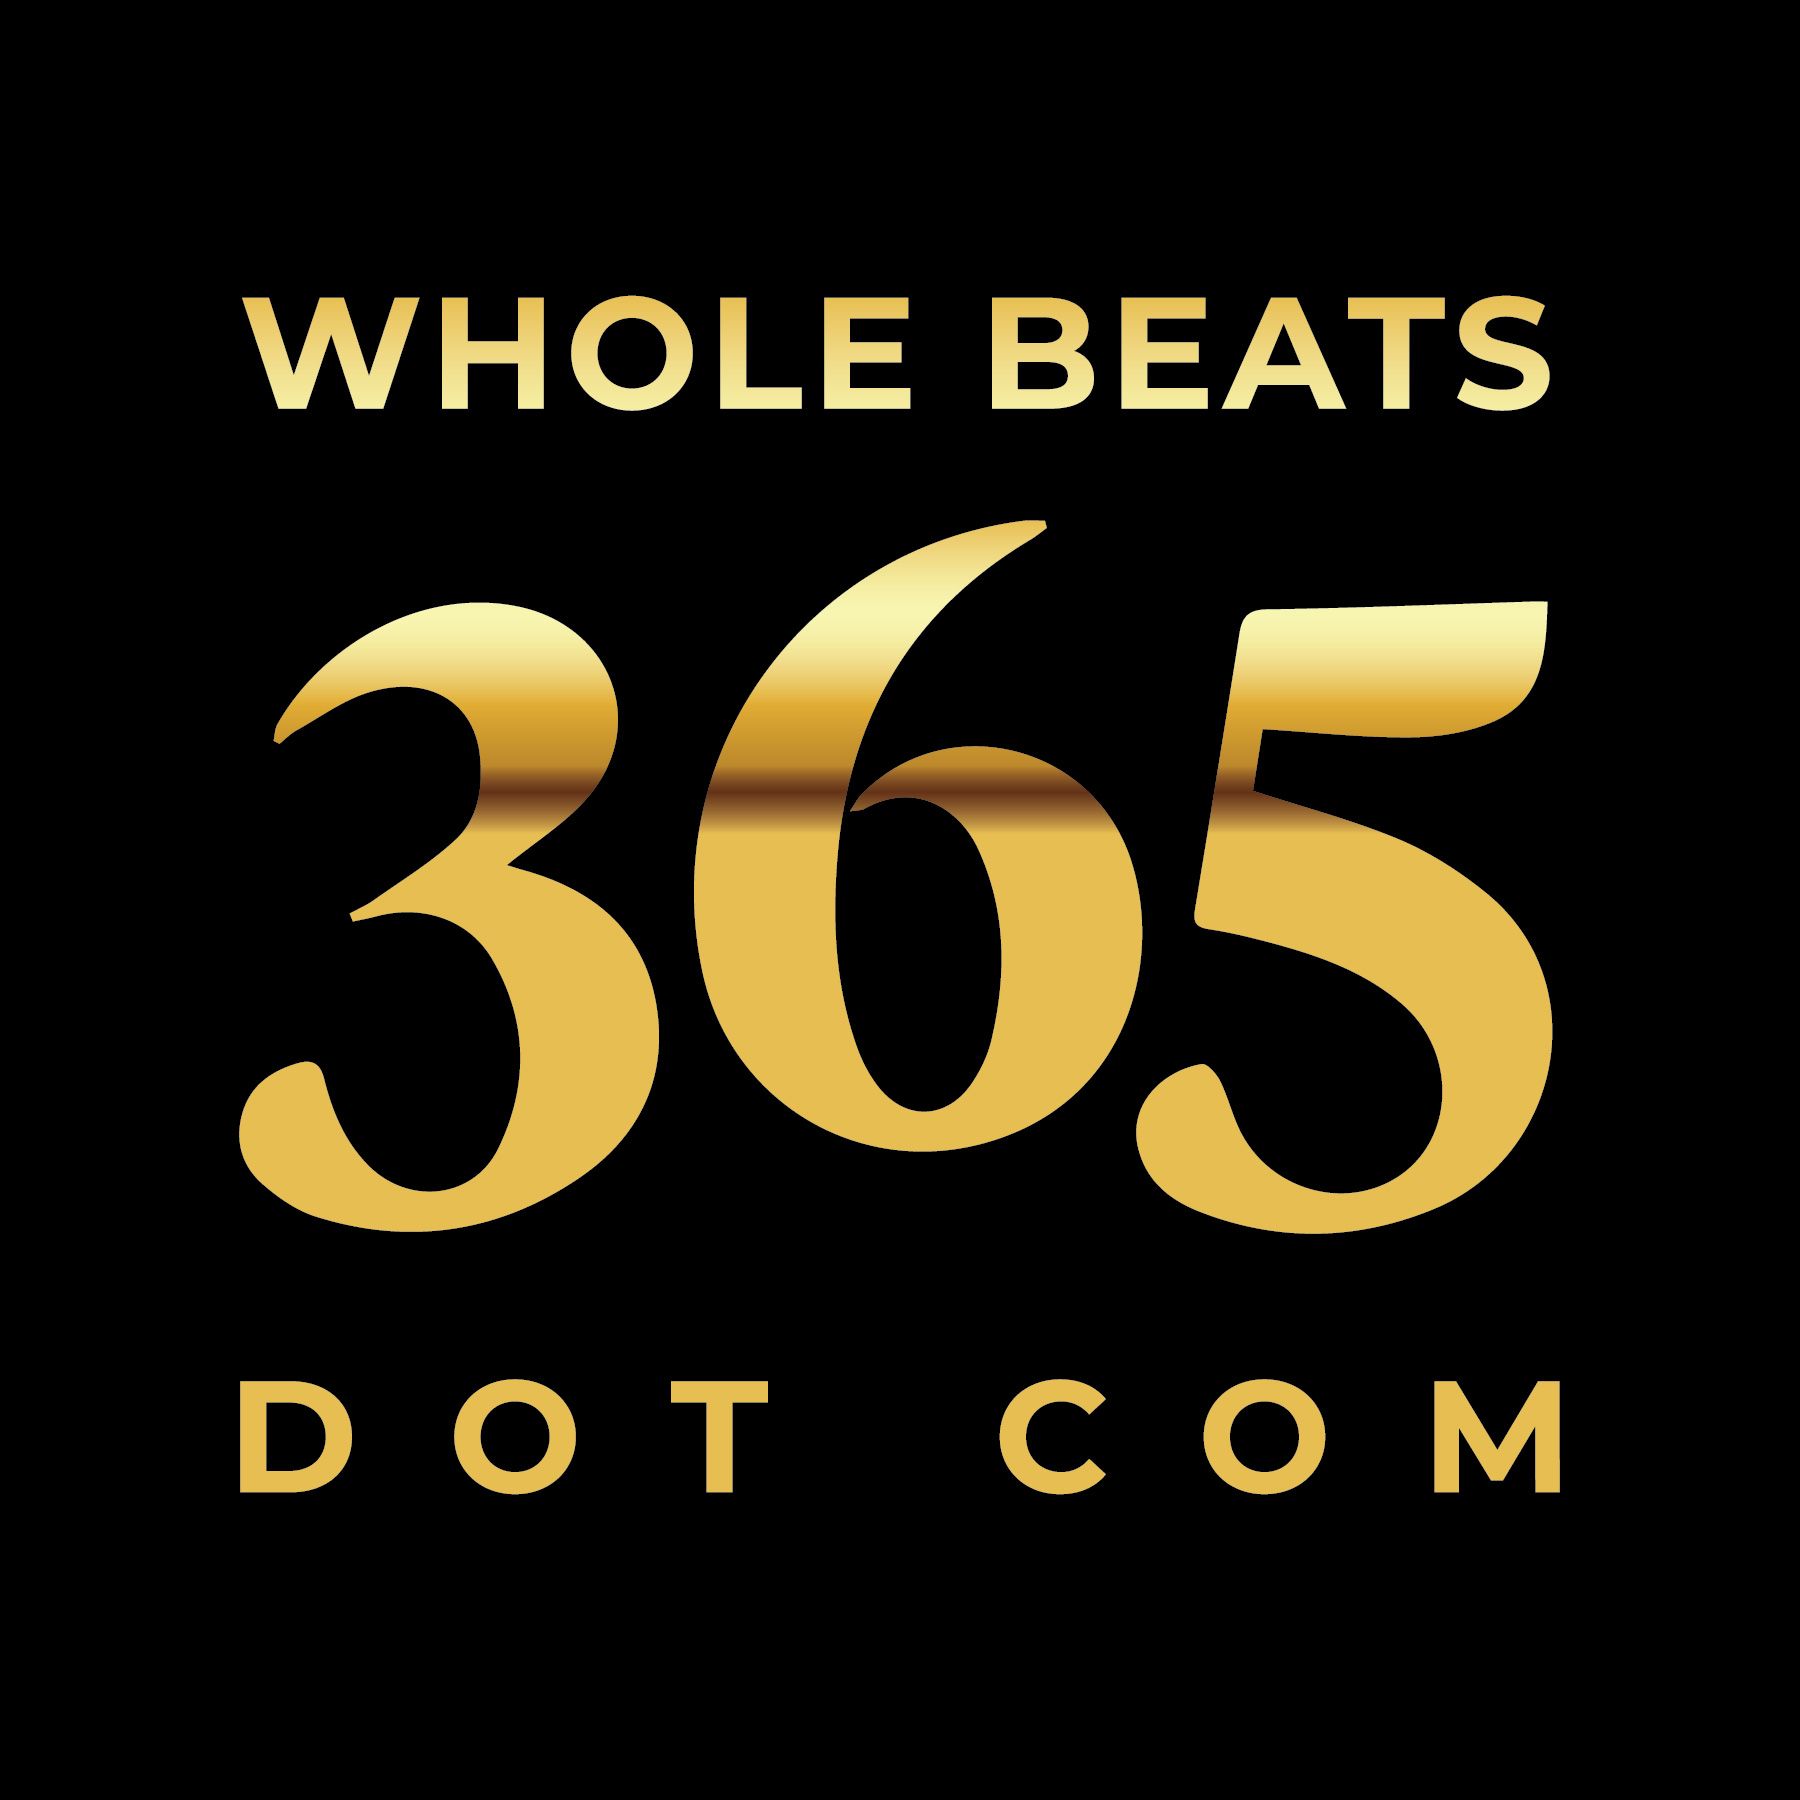 Whole Beats 365